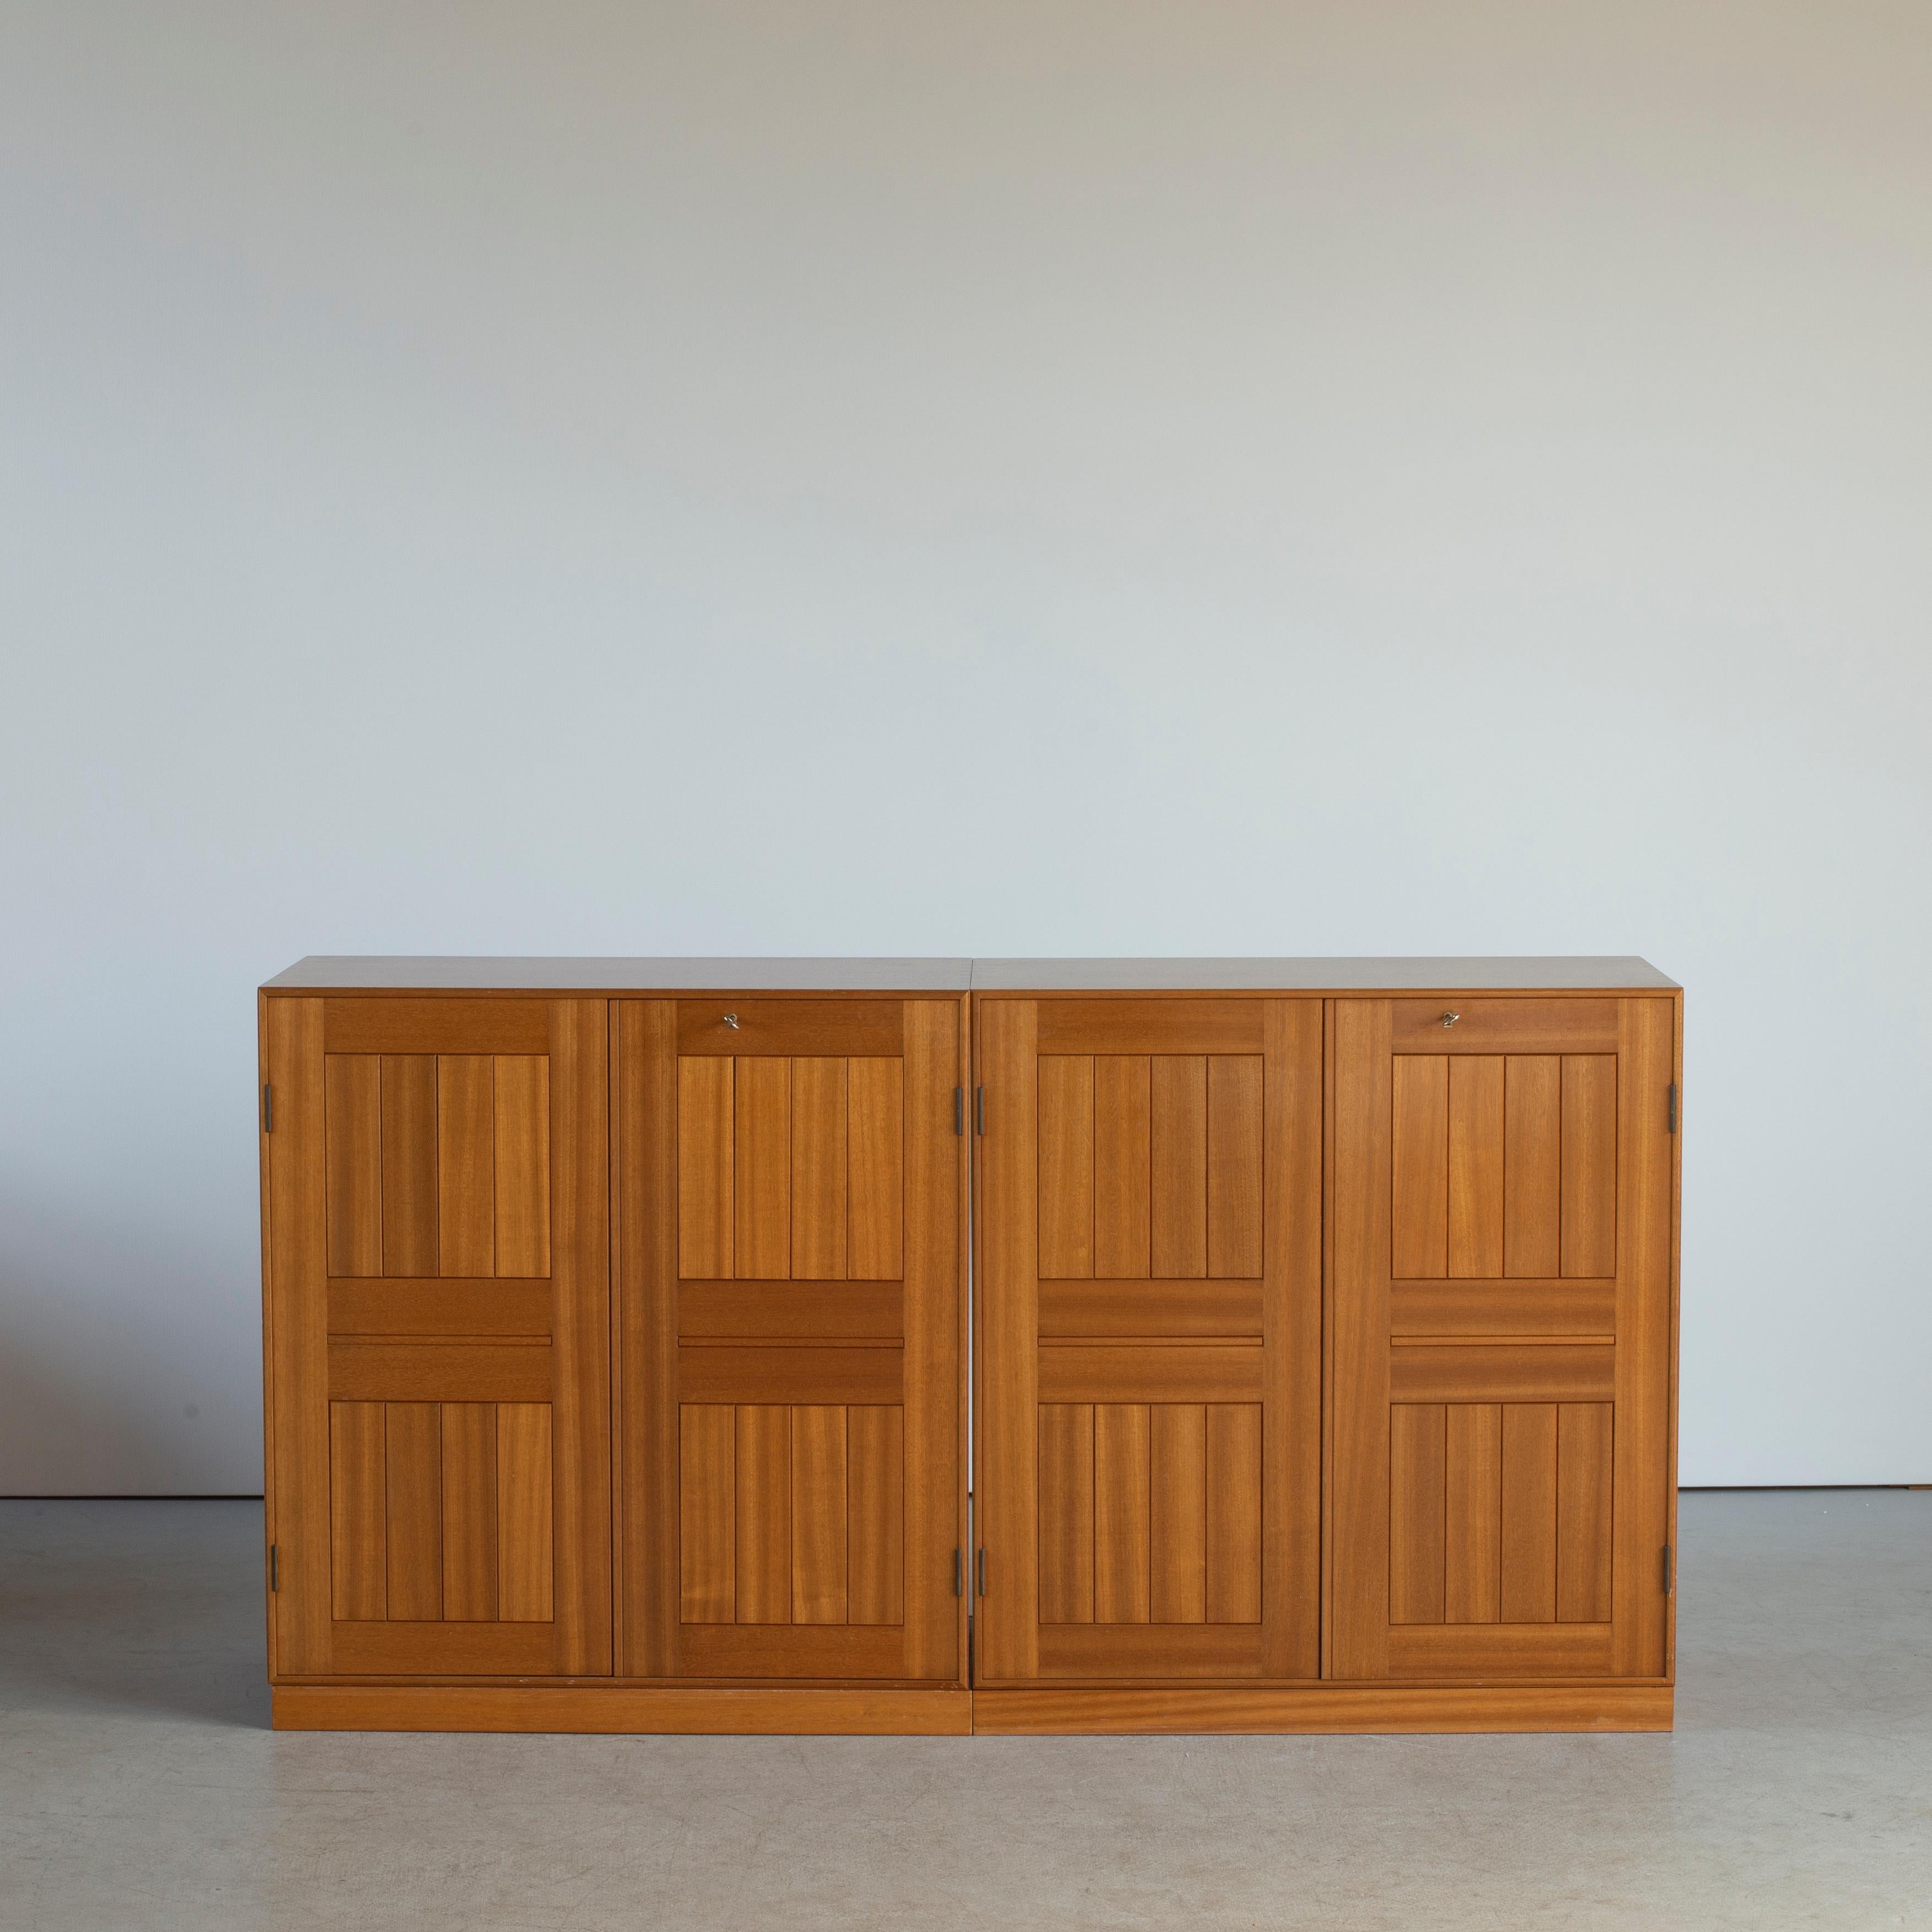 Mogens Koch pair of cabinets in mahogani. Executed by Rud. Rasmussen.

Reverse with paper labels ‘RUD. RASMUSSENS/SNEDKERIER/COPENHAGEN/DENMARK.